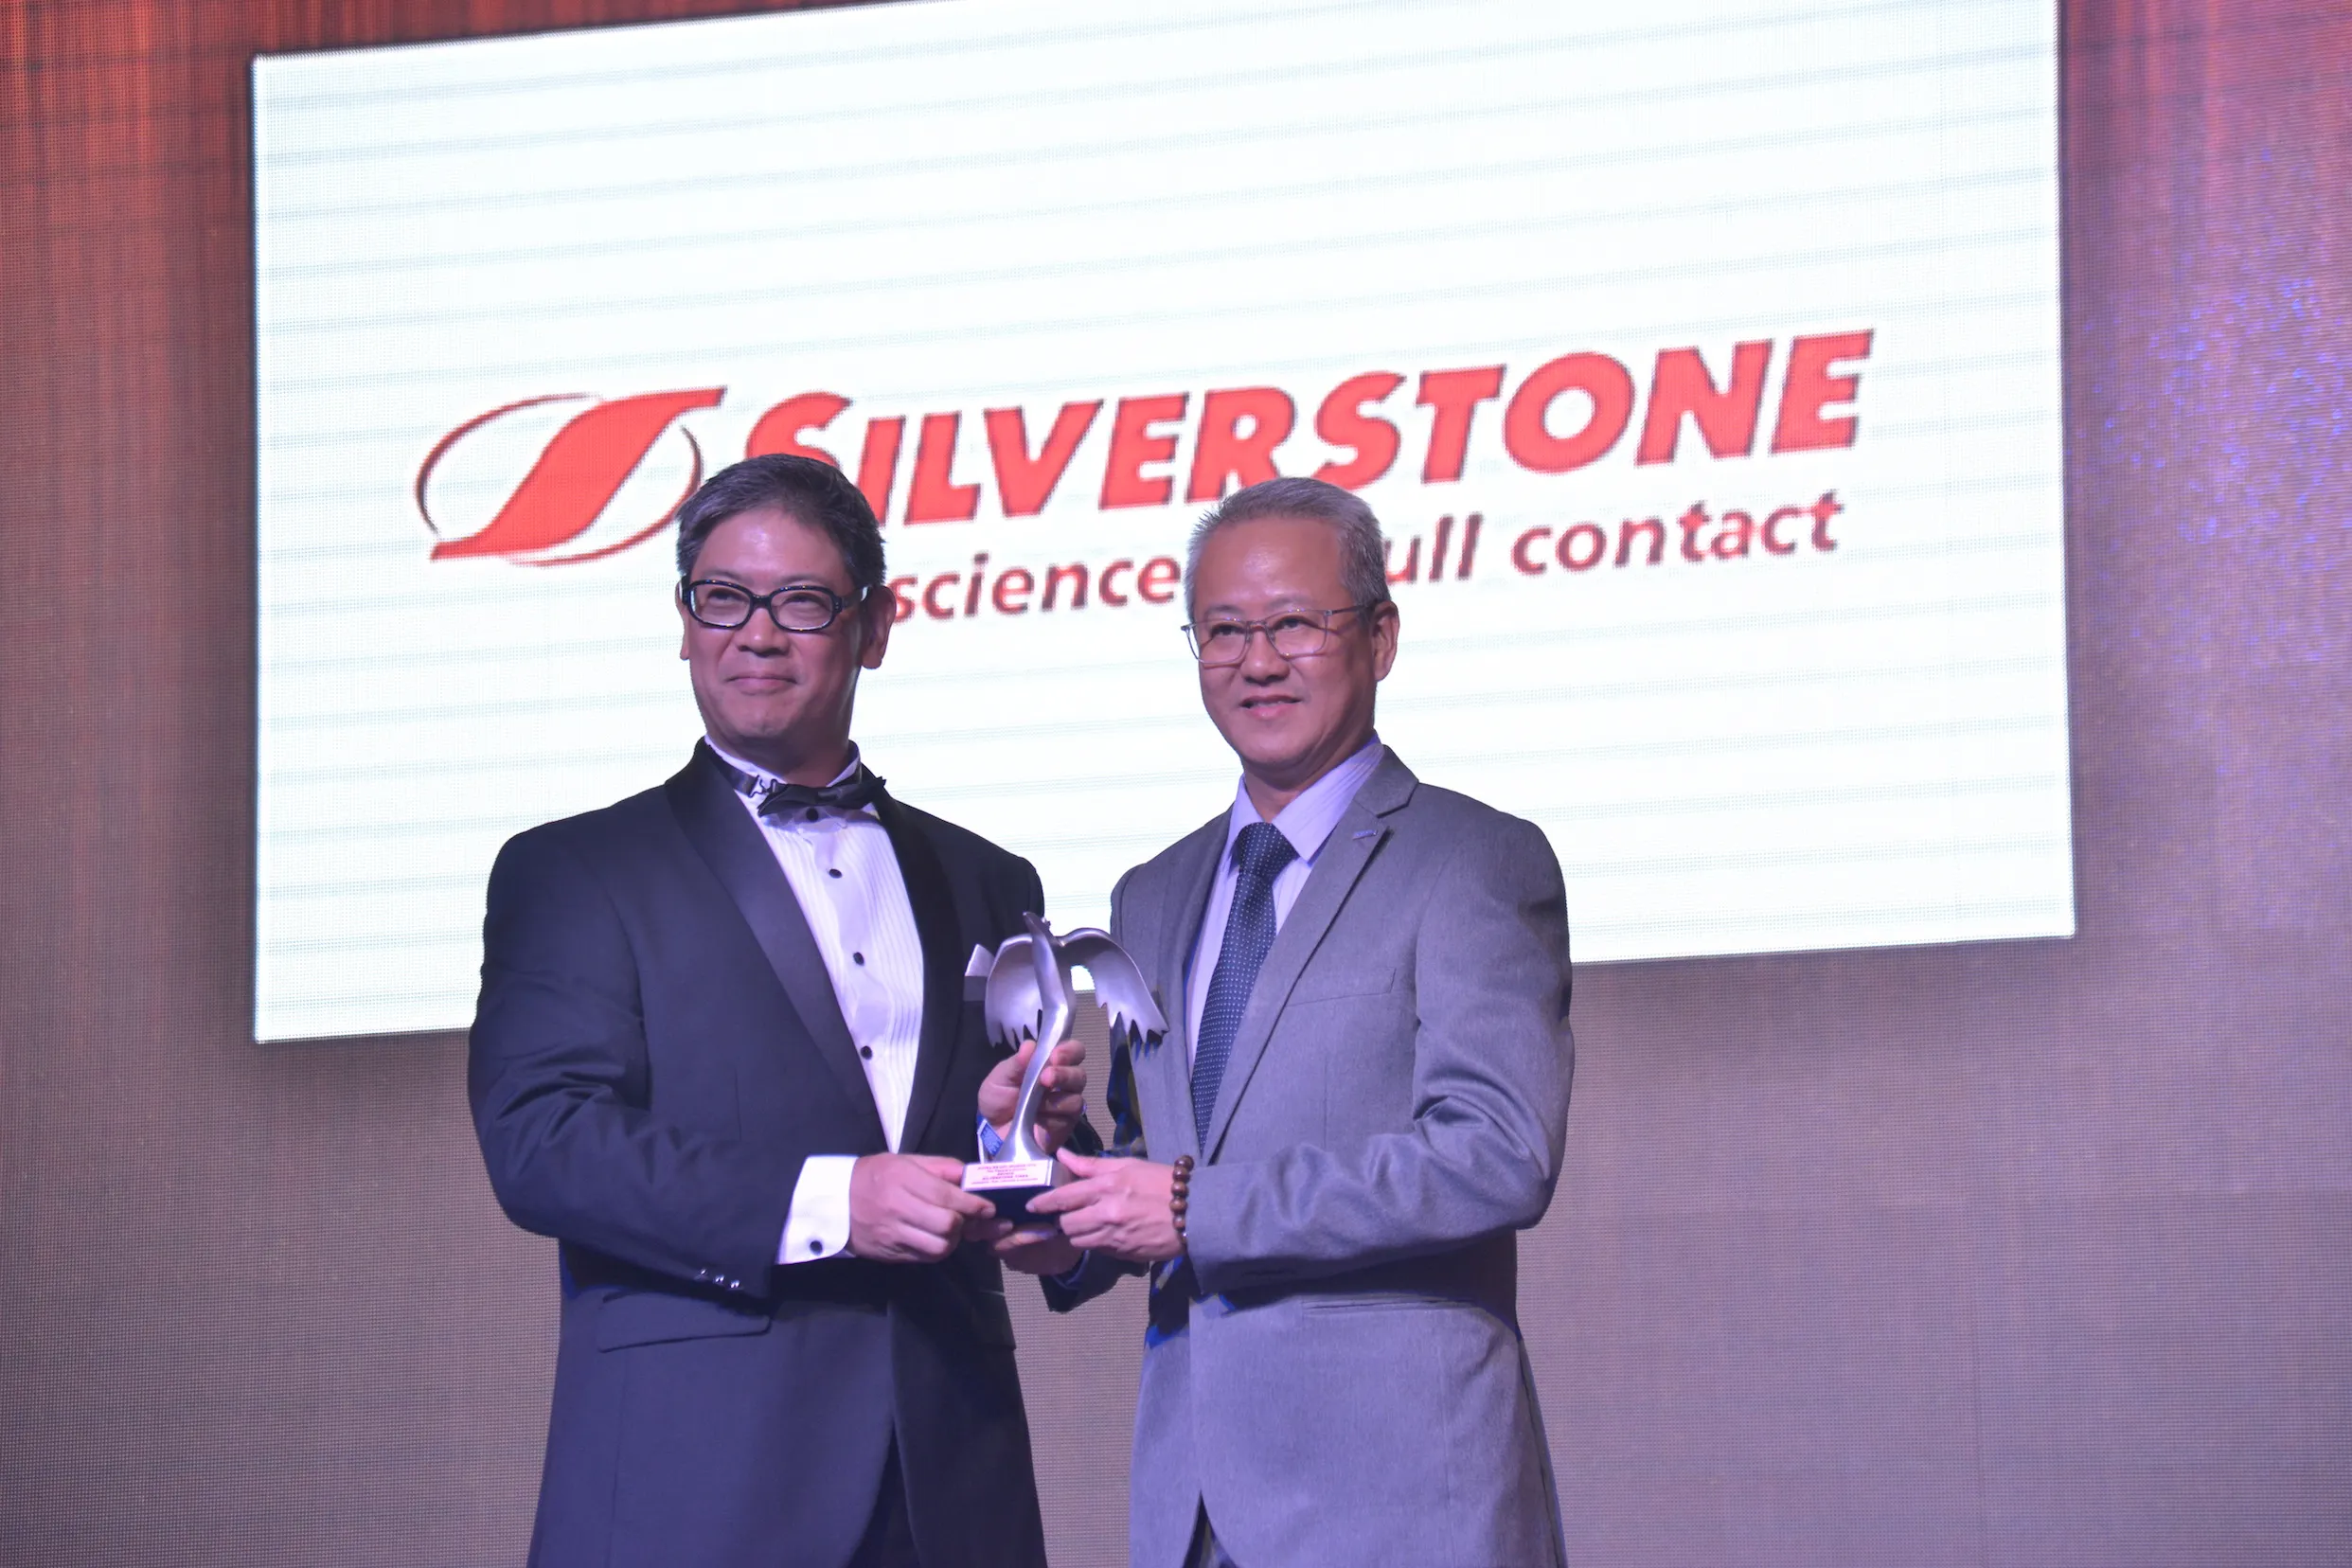 Silverstone 2019 Putra Awards